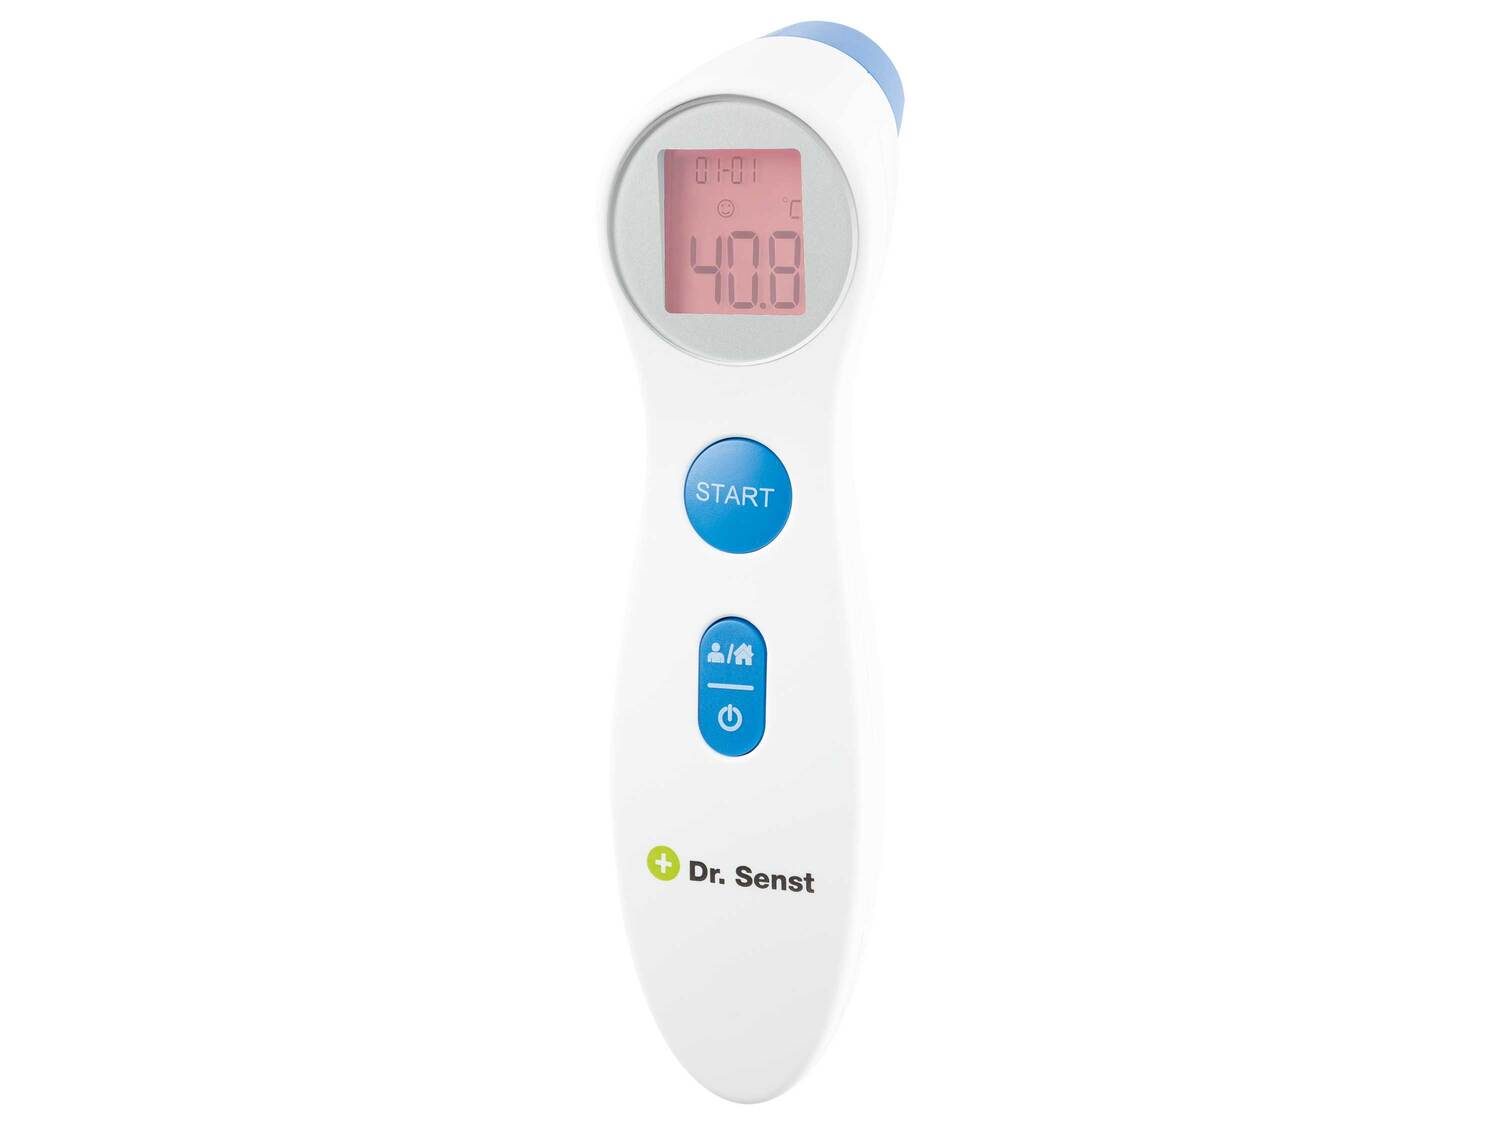 Thermomètre frontal infrarouge , le prix 17.99 € 
- Mesure de la température ...